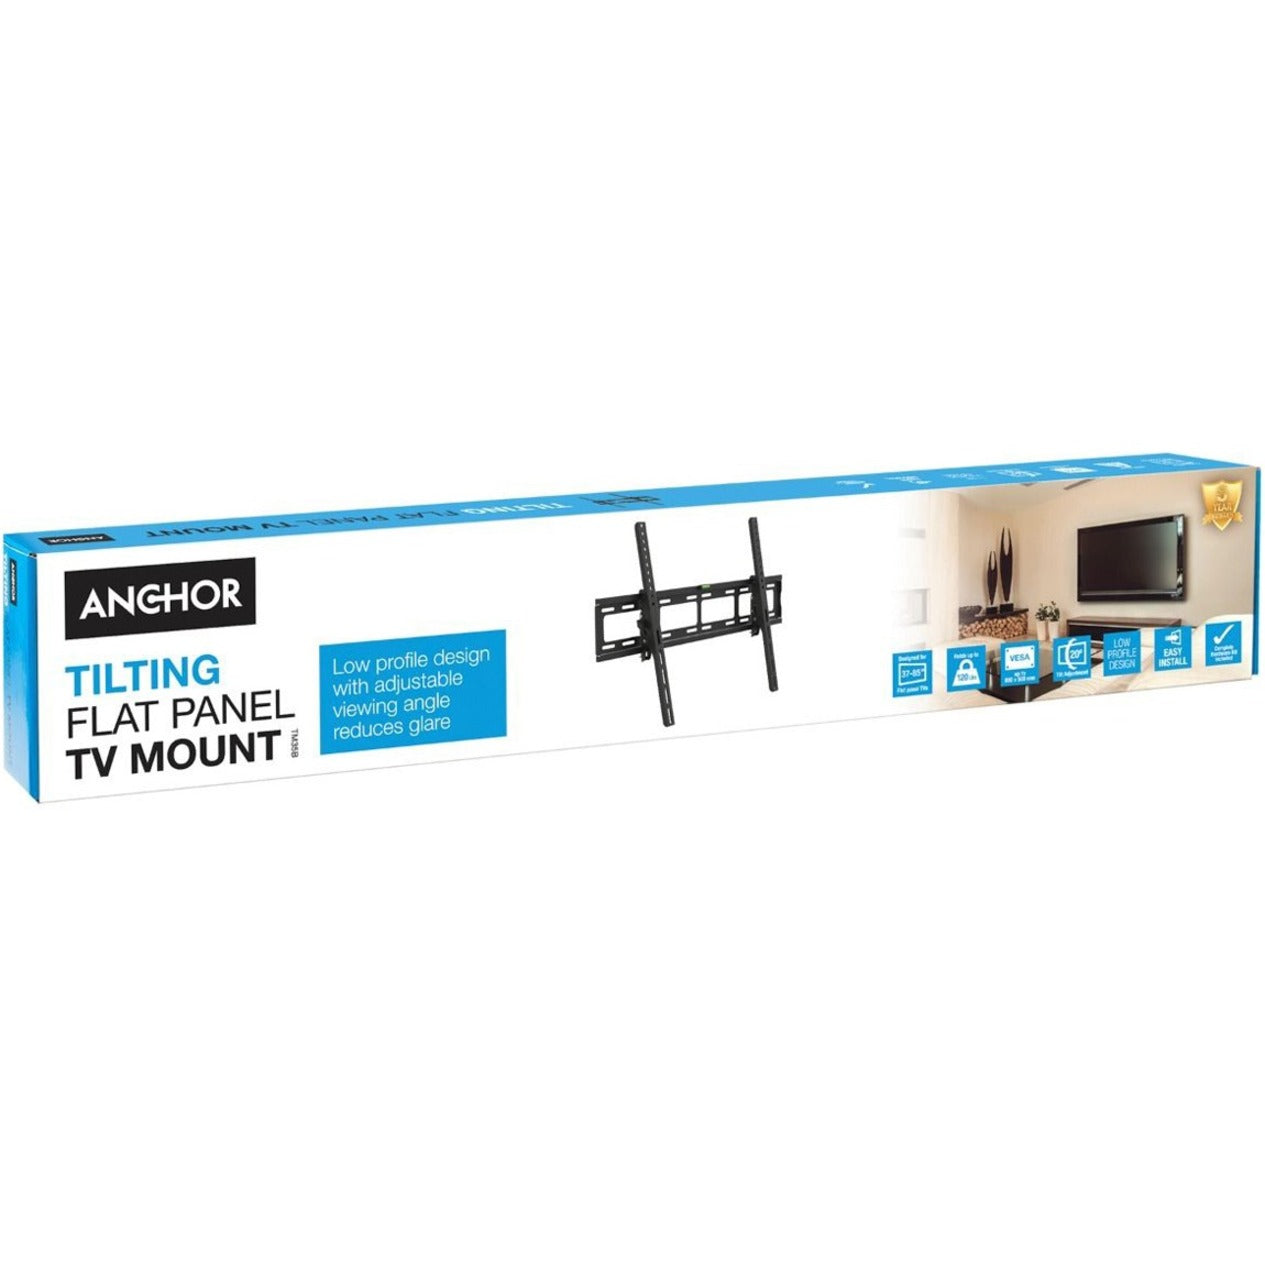 GPX TM35B Tilting Flat Panel TV Mount - Black, Adjustable Tilt, Reduced Glare, Adjustable Viewing Angle